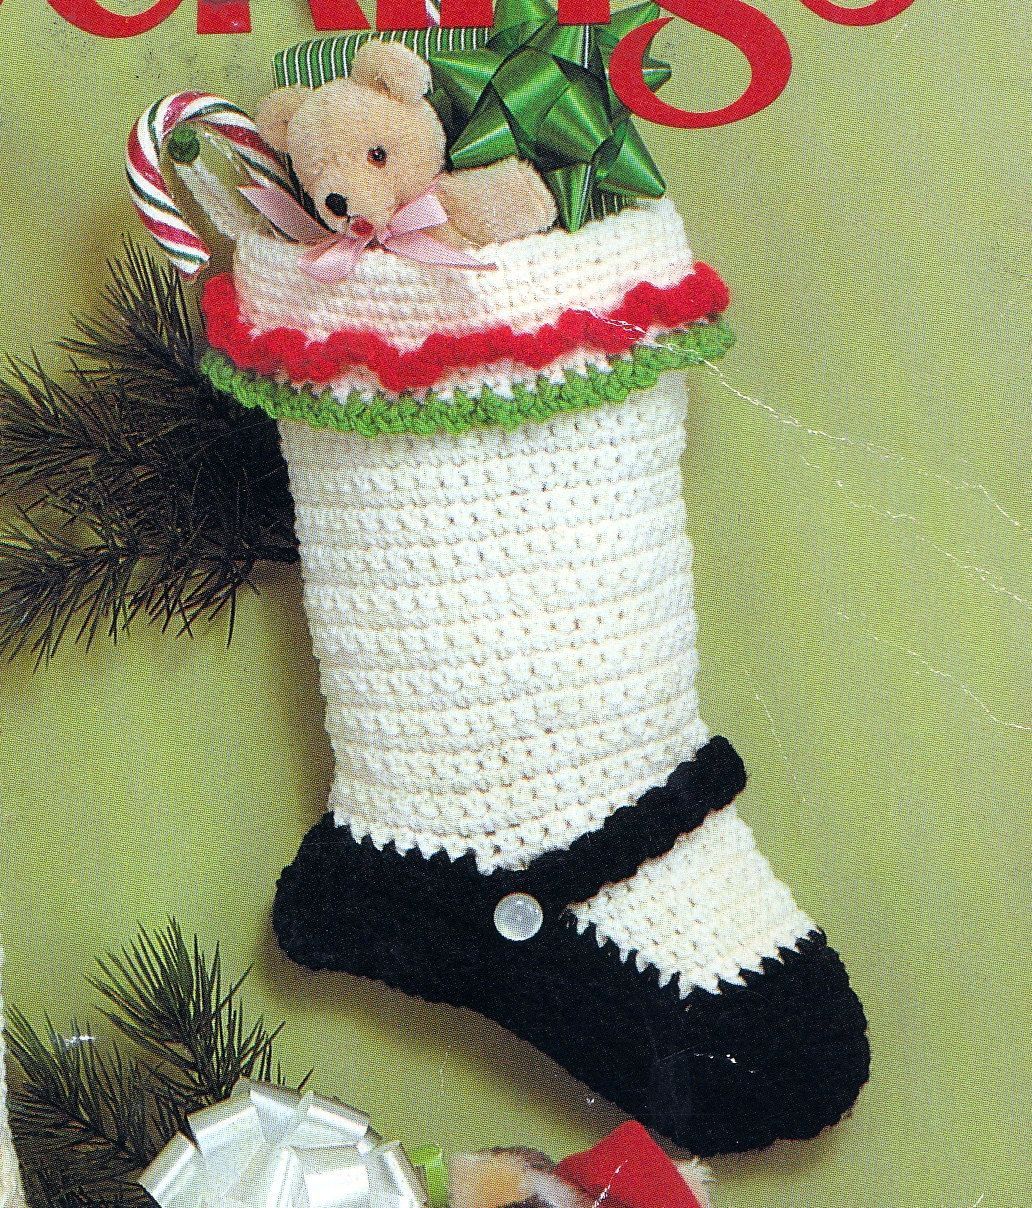 Crochet Christmas Stocking Mary Jane Vintage Crocheting PDF PATTERN. $2.50, via